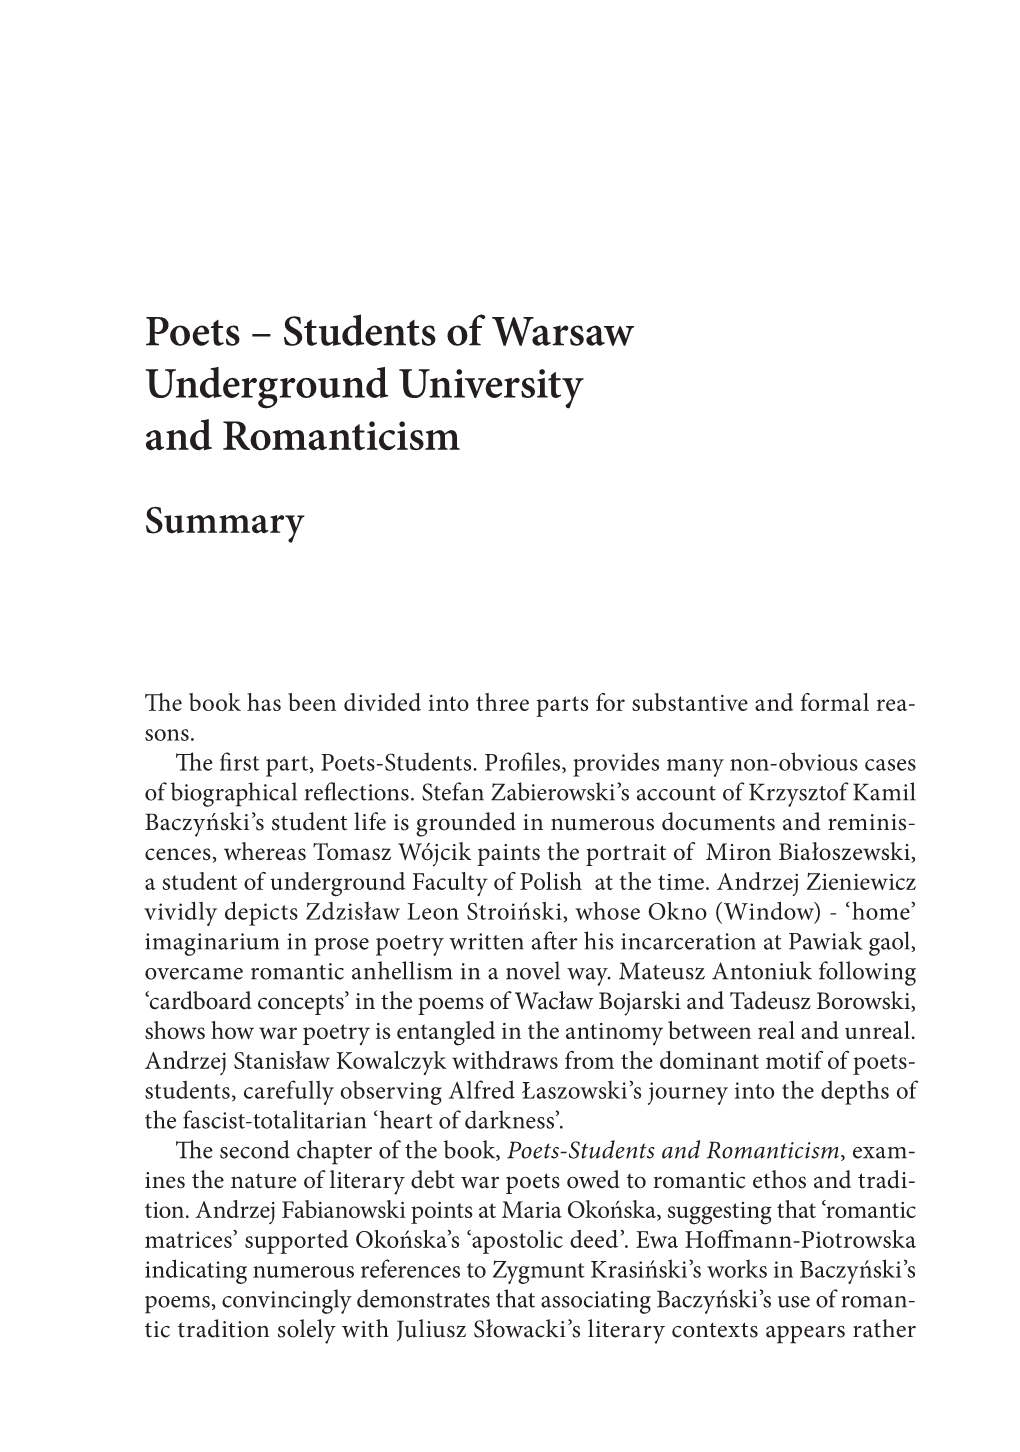 Poets – Students of Warsaw Underground University and Romanticism